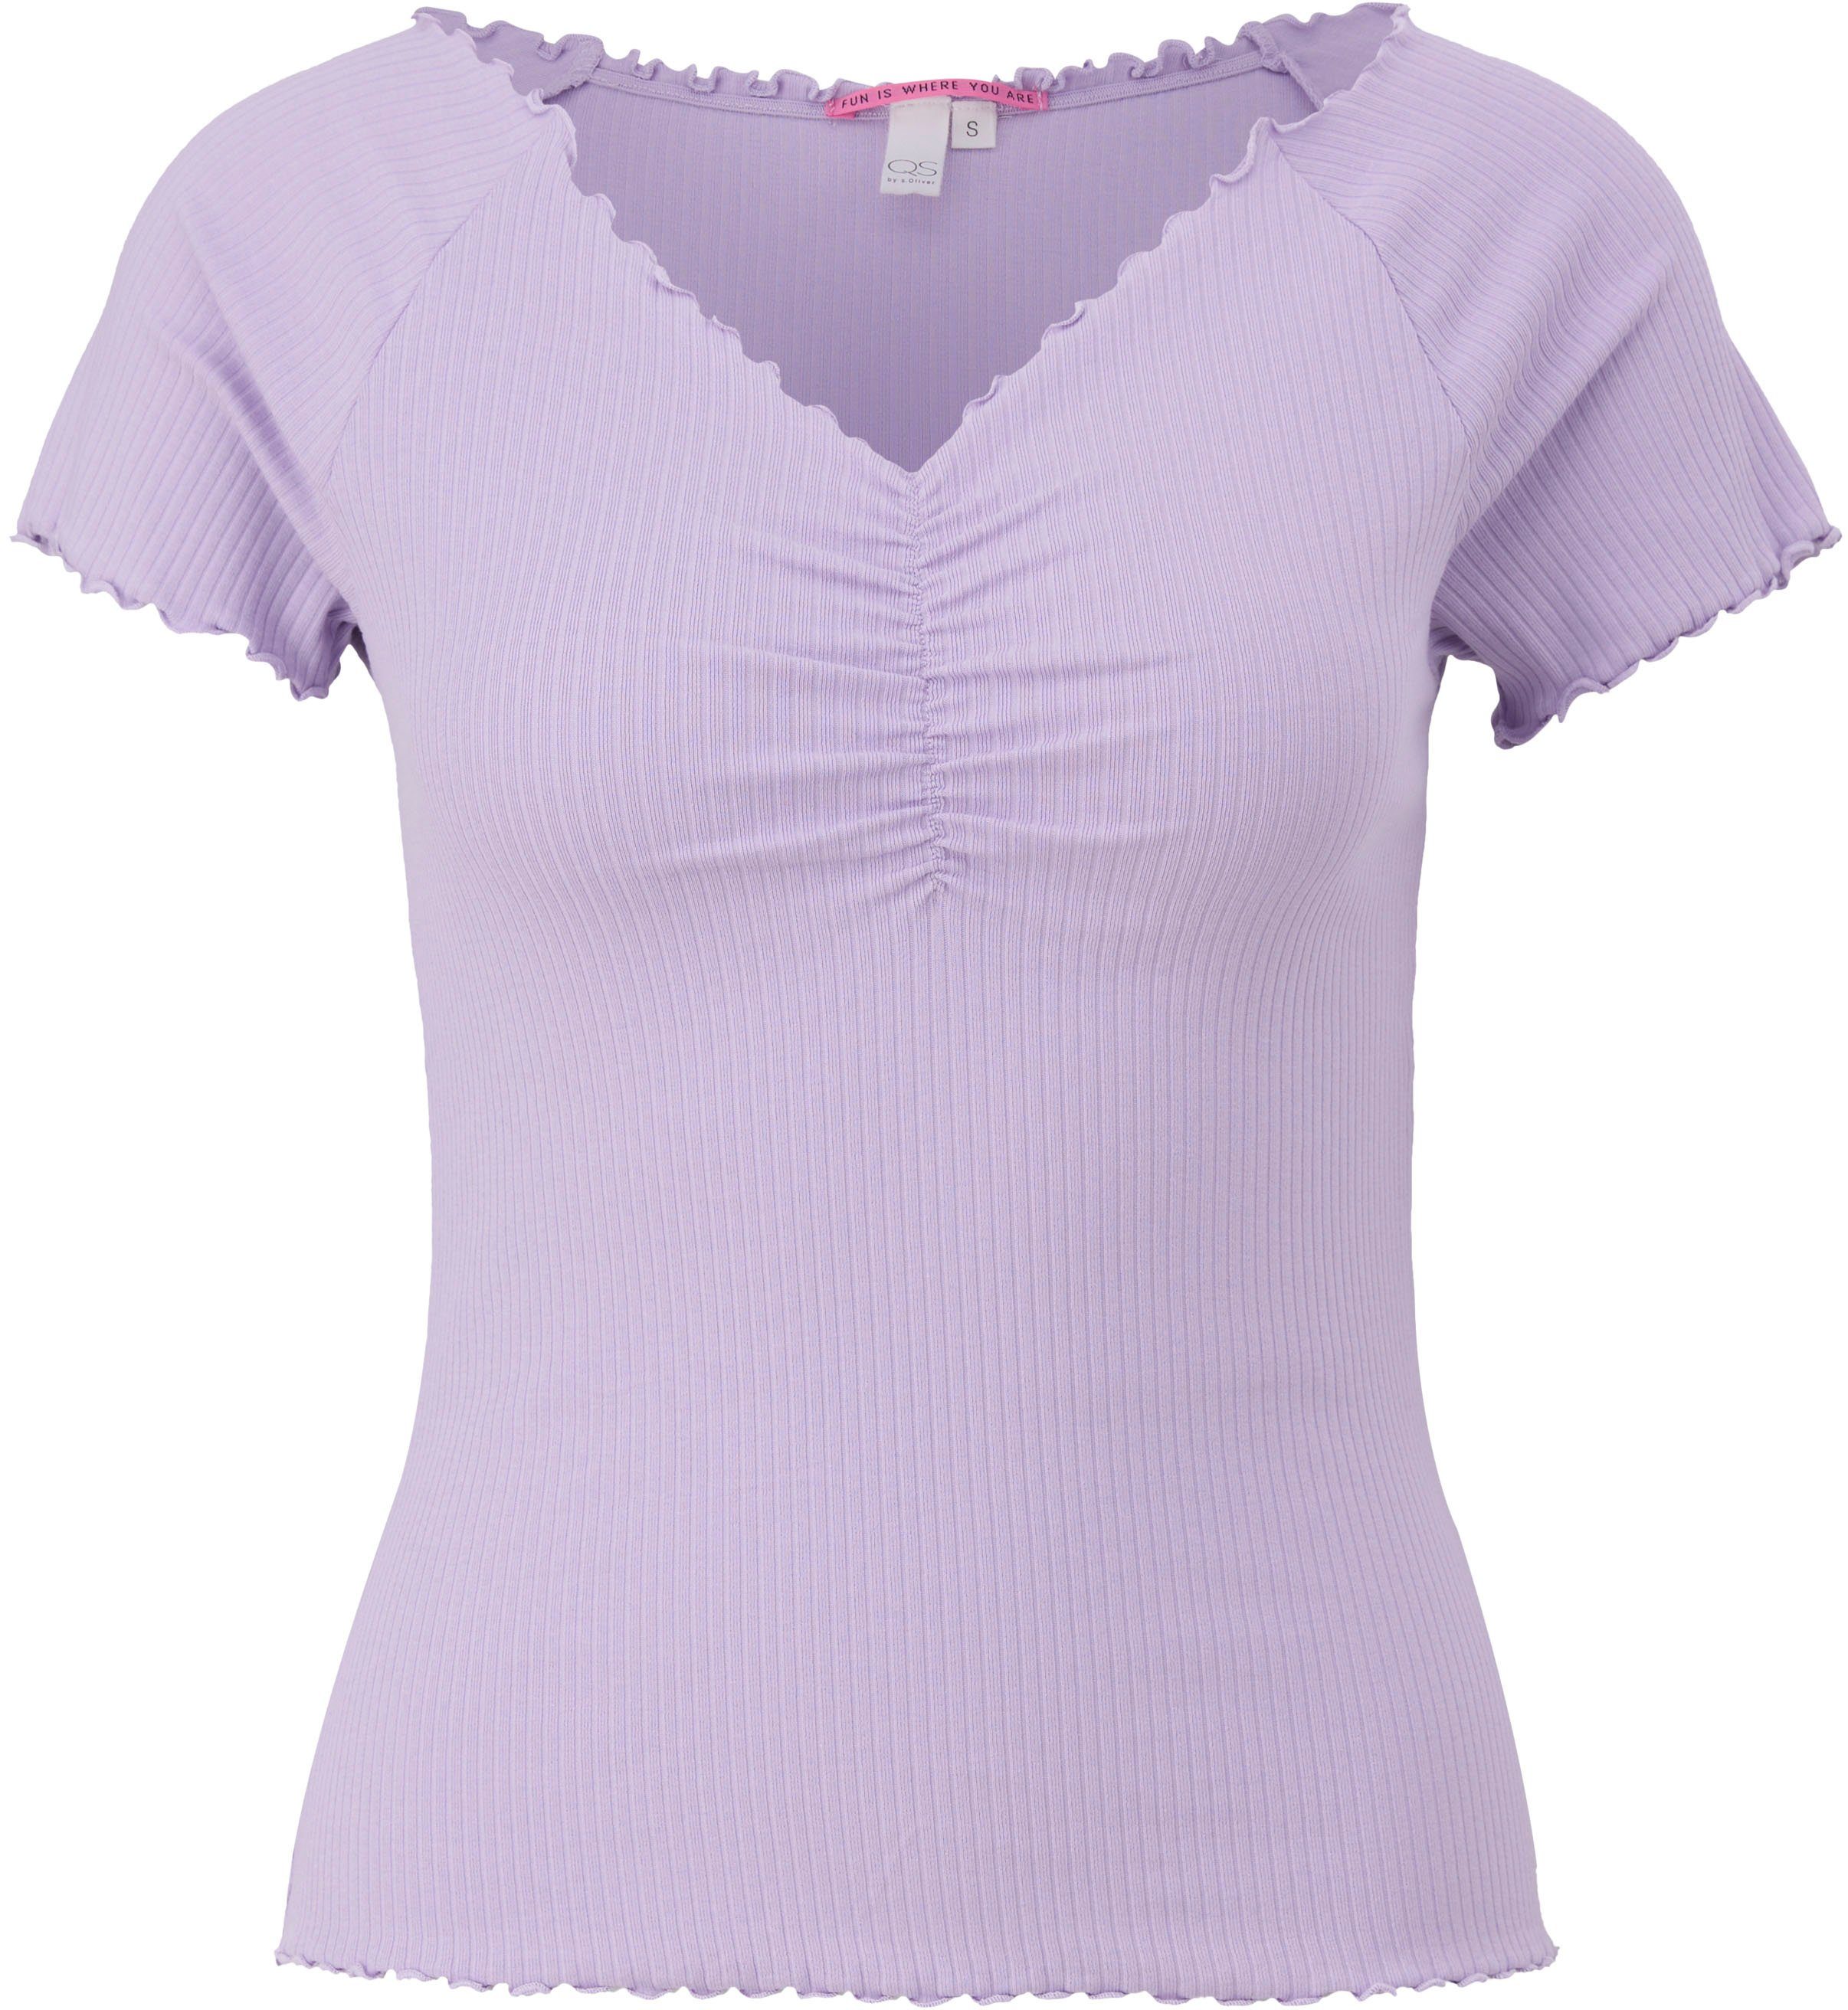 T-Shirt lilac/pink mit QS Bogenkante